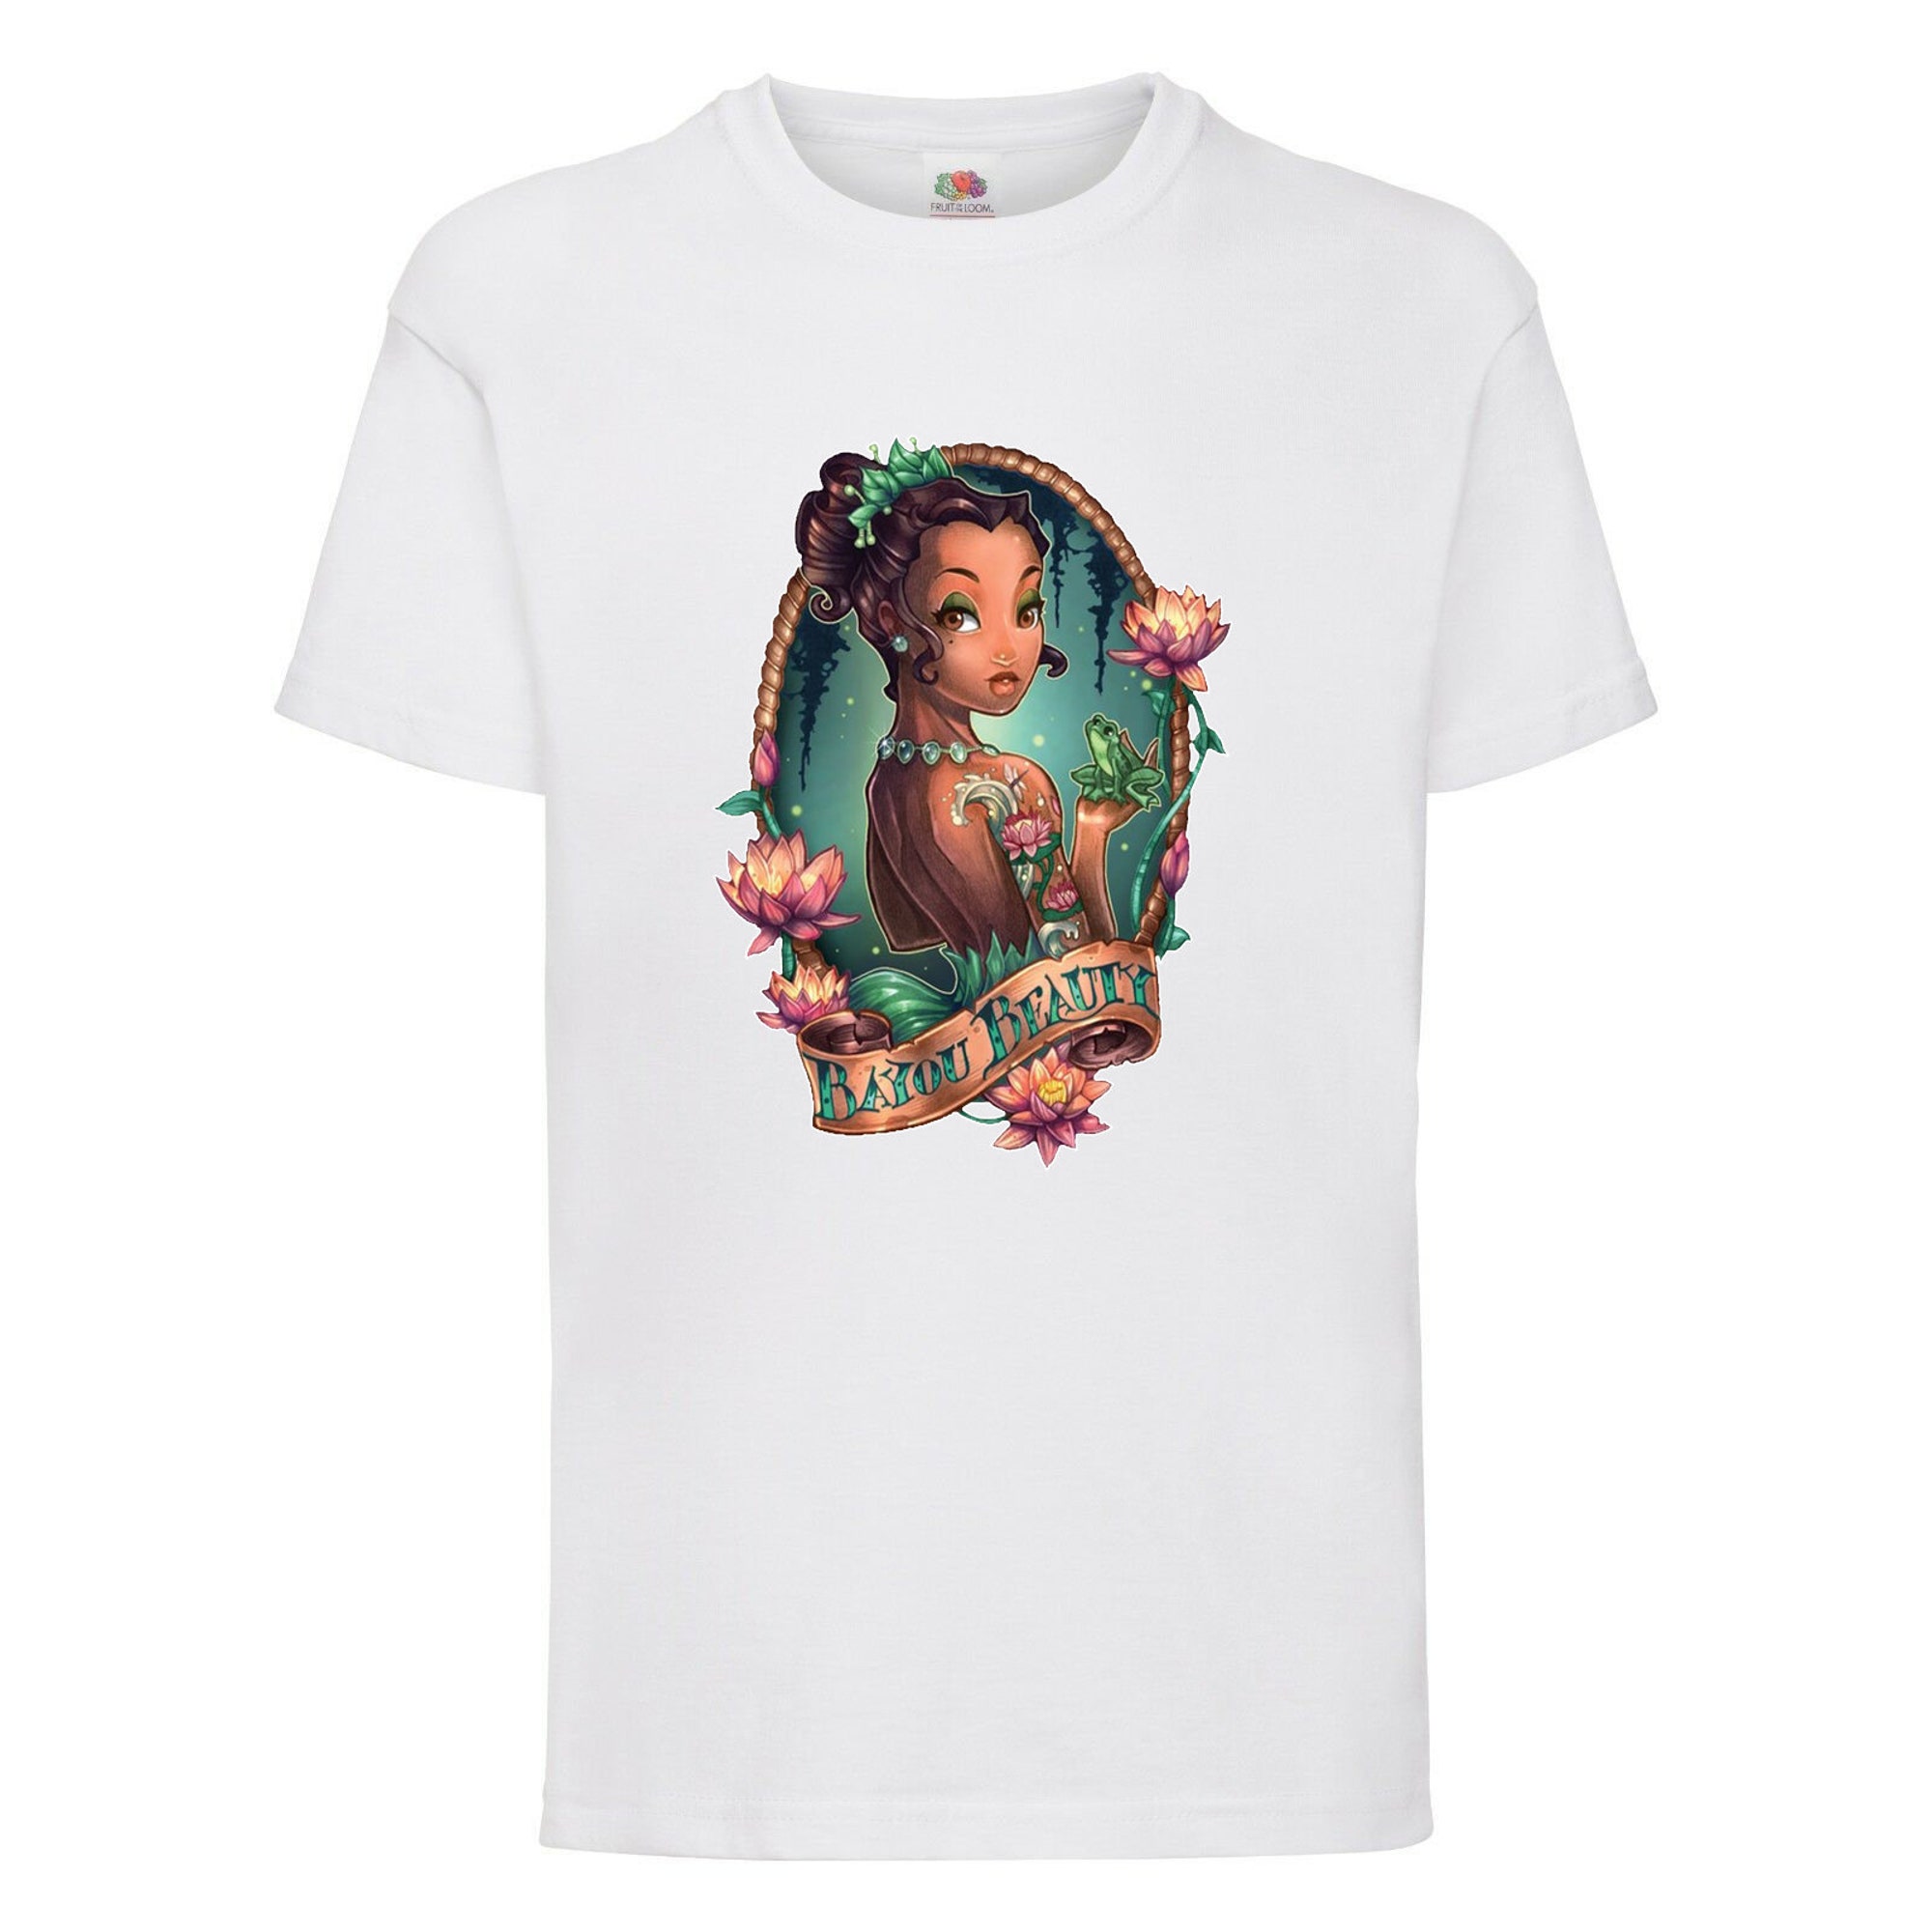 Disney Princess Tiana Tattoo The Princess and The Frog Bayou Beauty Kids Unisex Boy Girl Birthday Gift T shirt